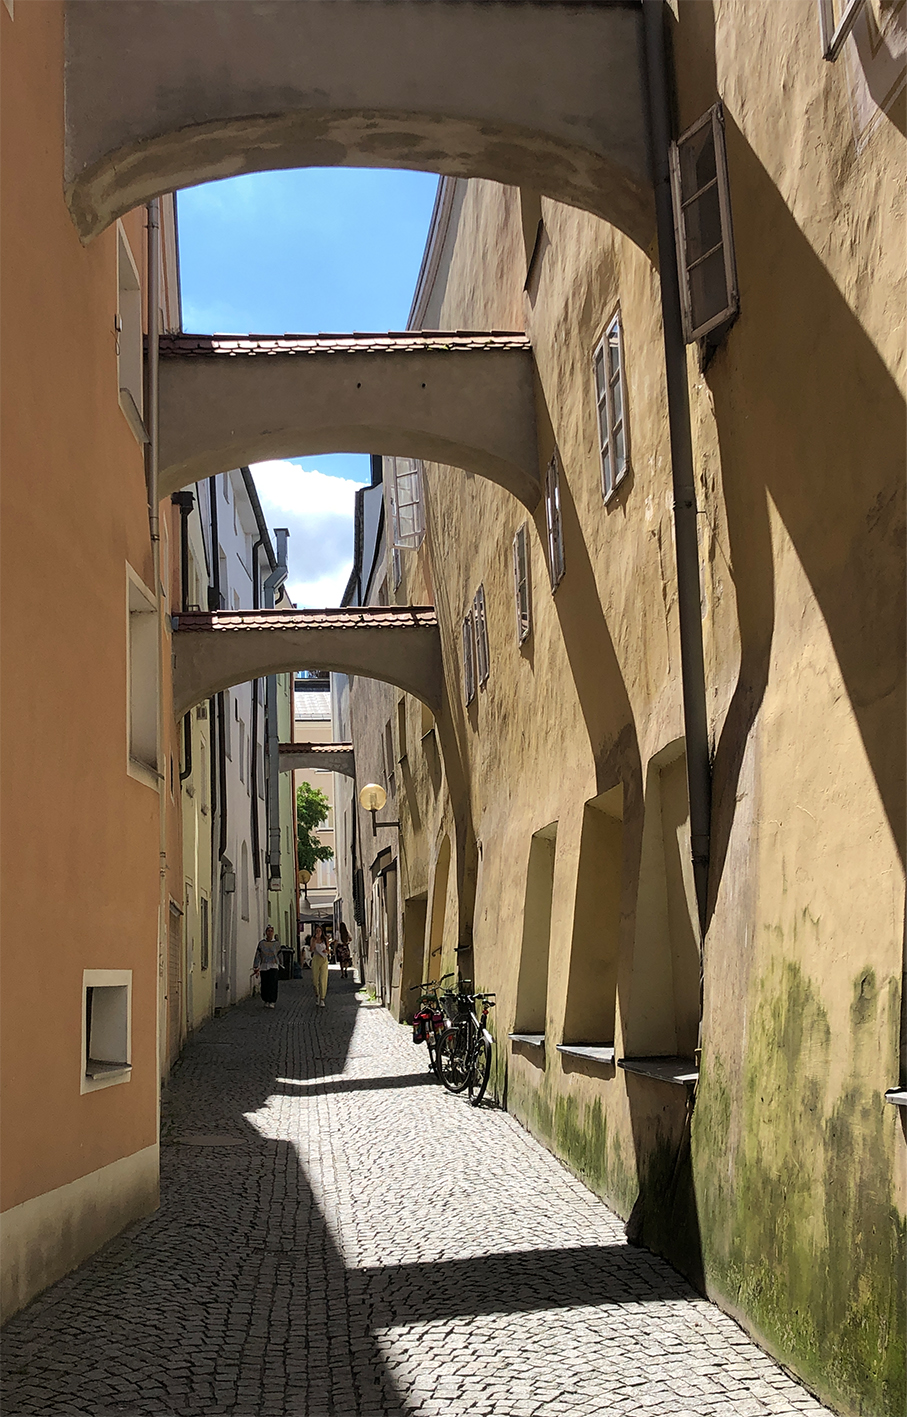 Passau City